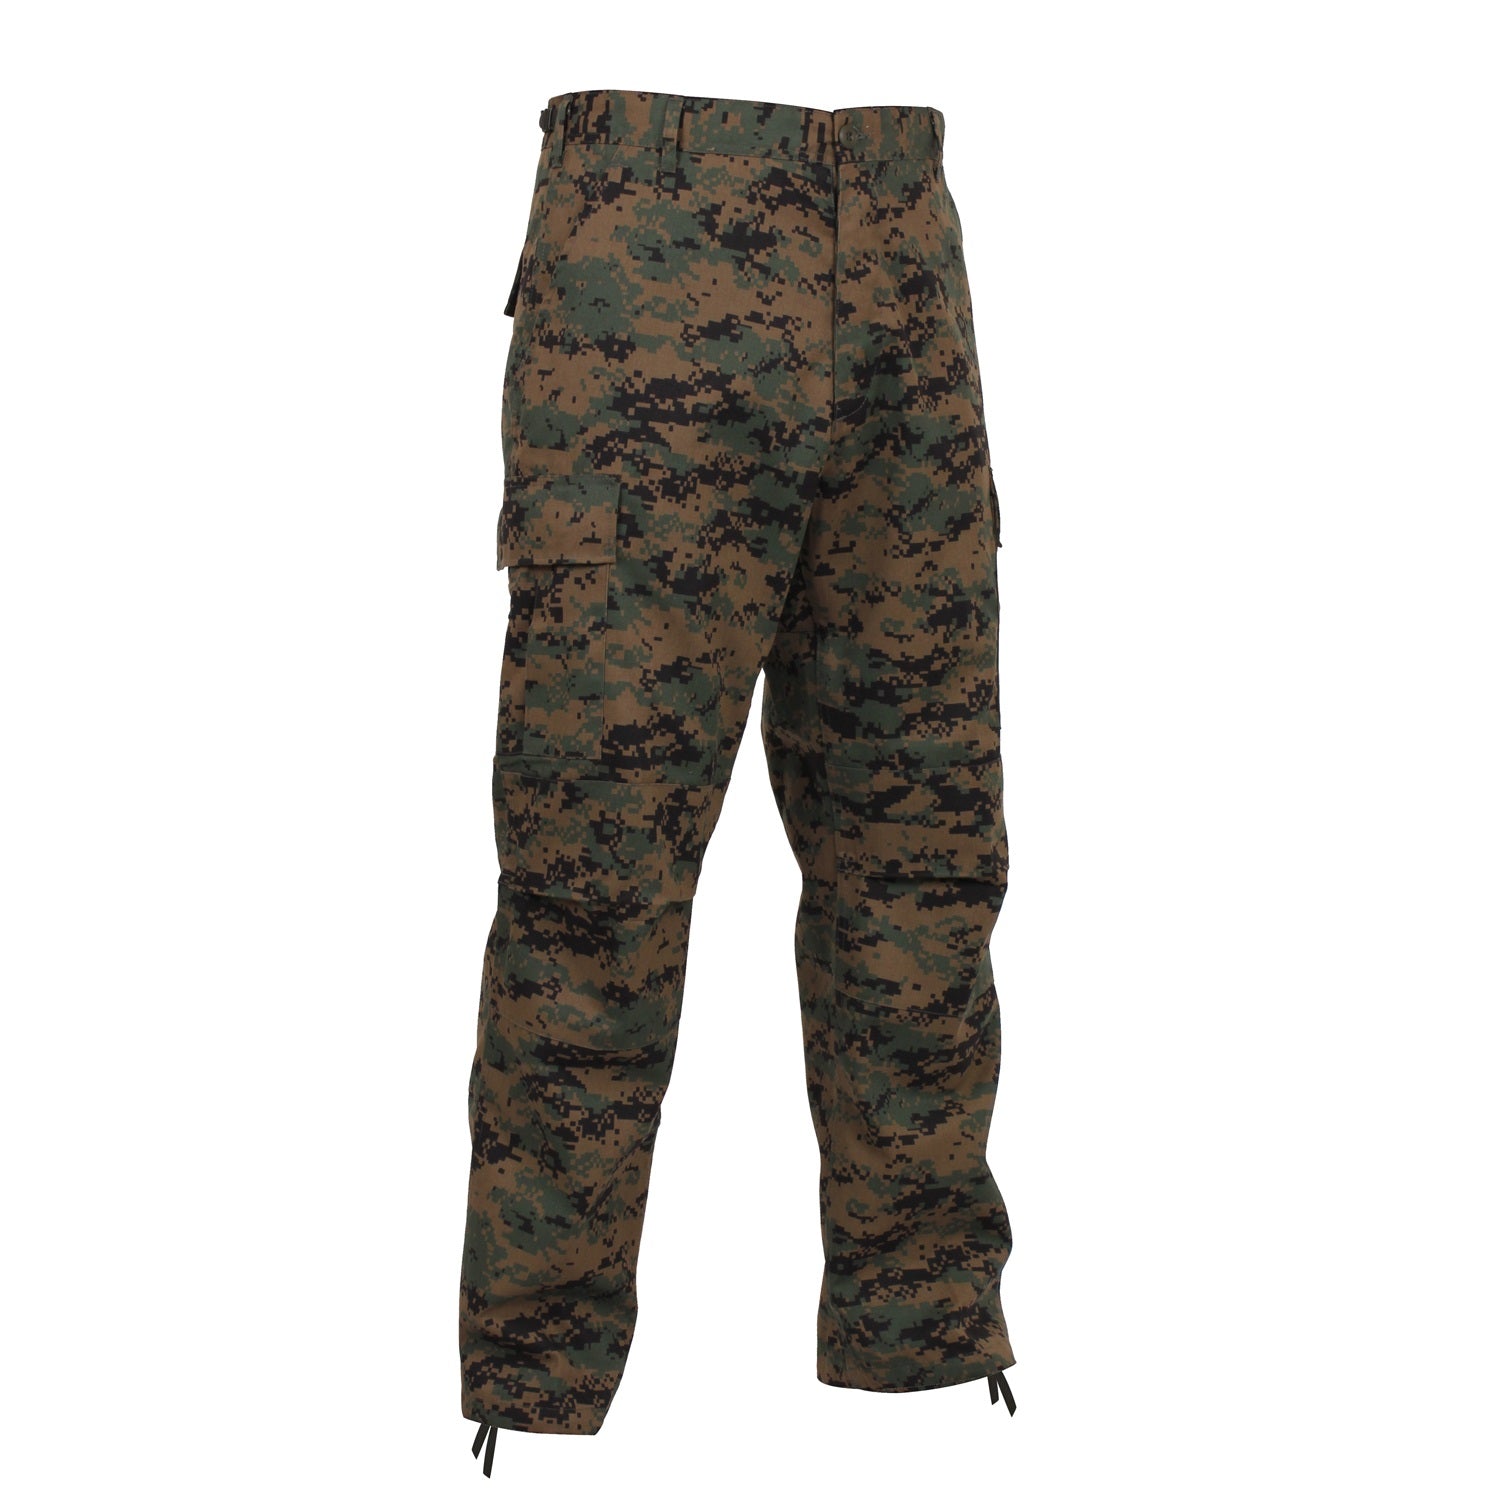 5.11 Tactical Women's Tactical Pant - New Fit